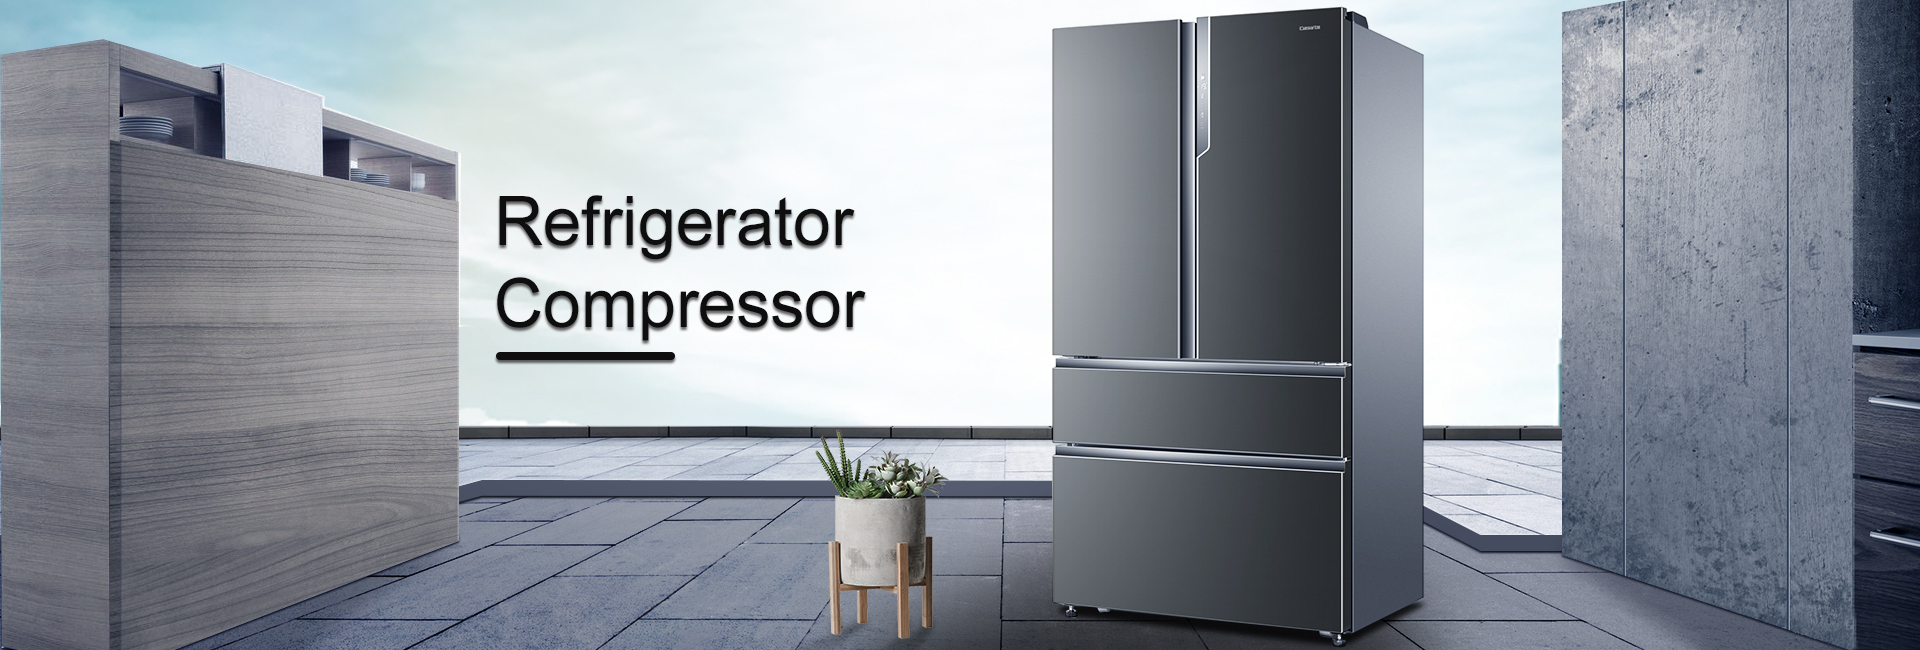 компрессор холодильника 04